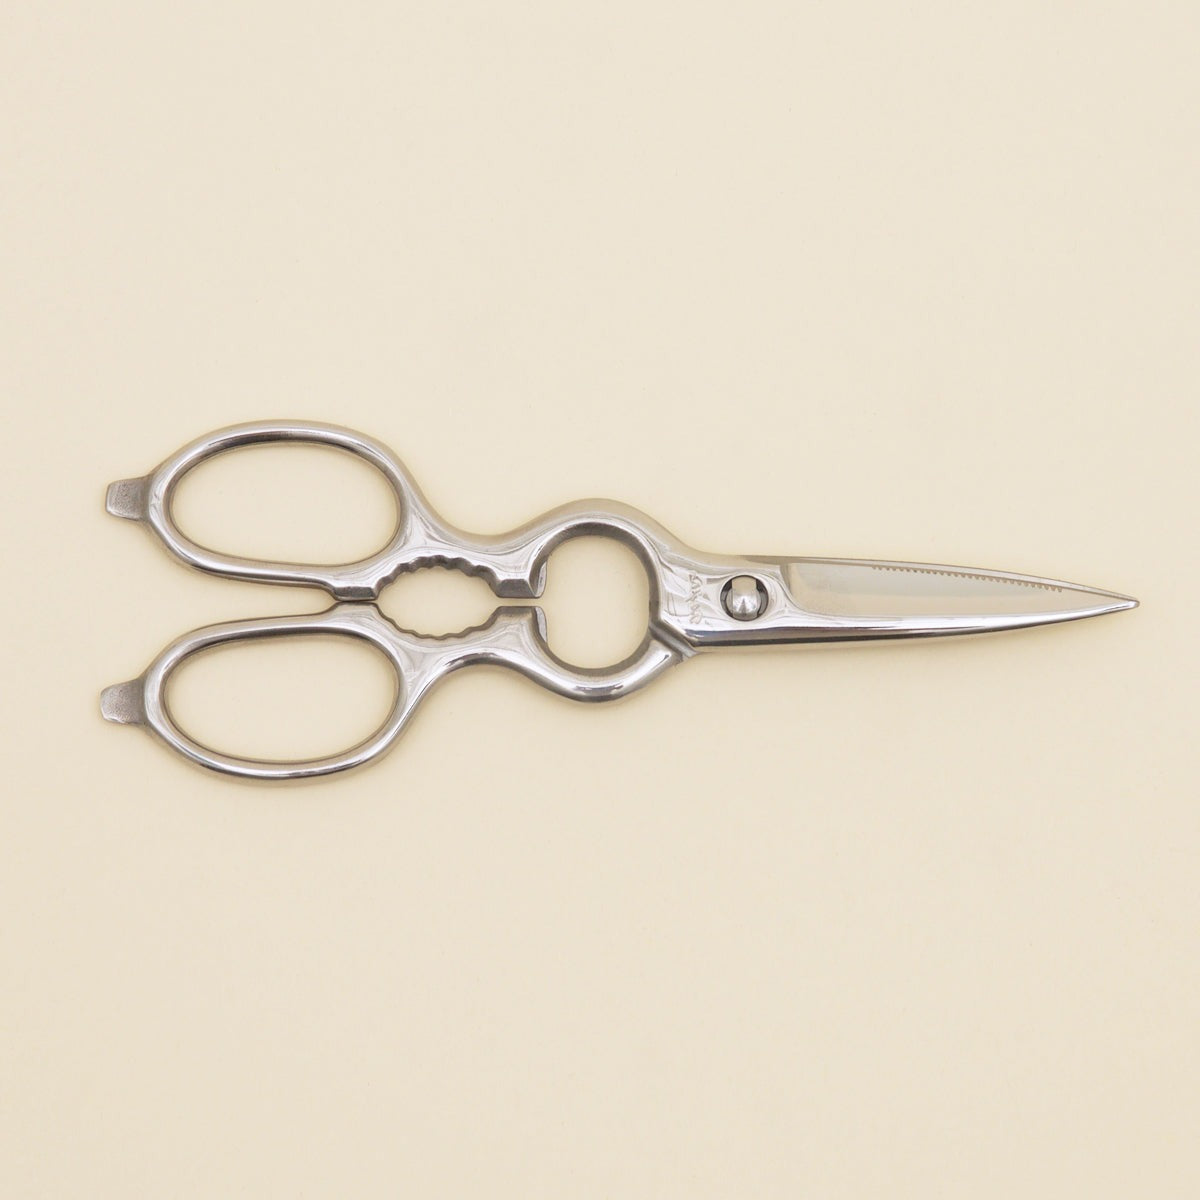 Shuoji Multifunctional Kitchen Scissors Knives Detachable